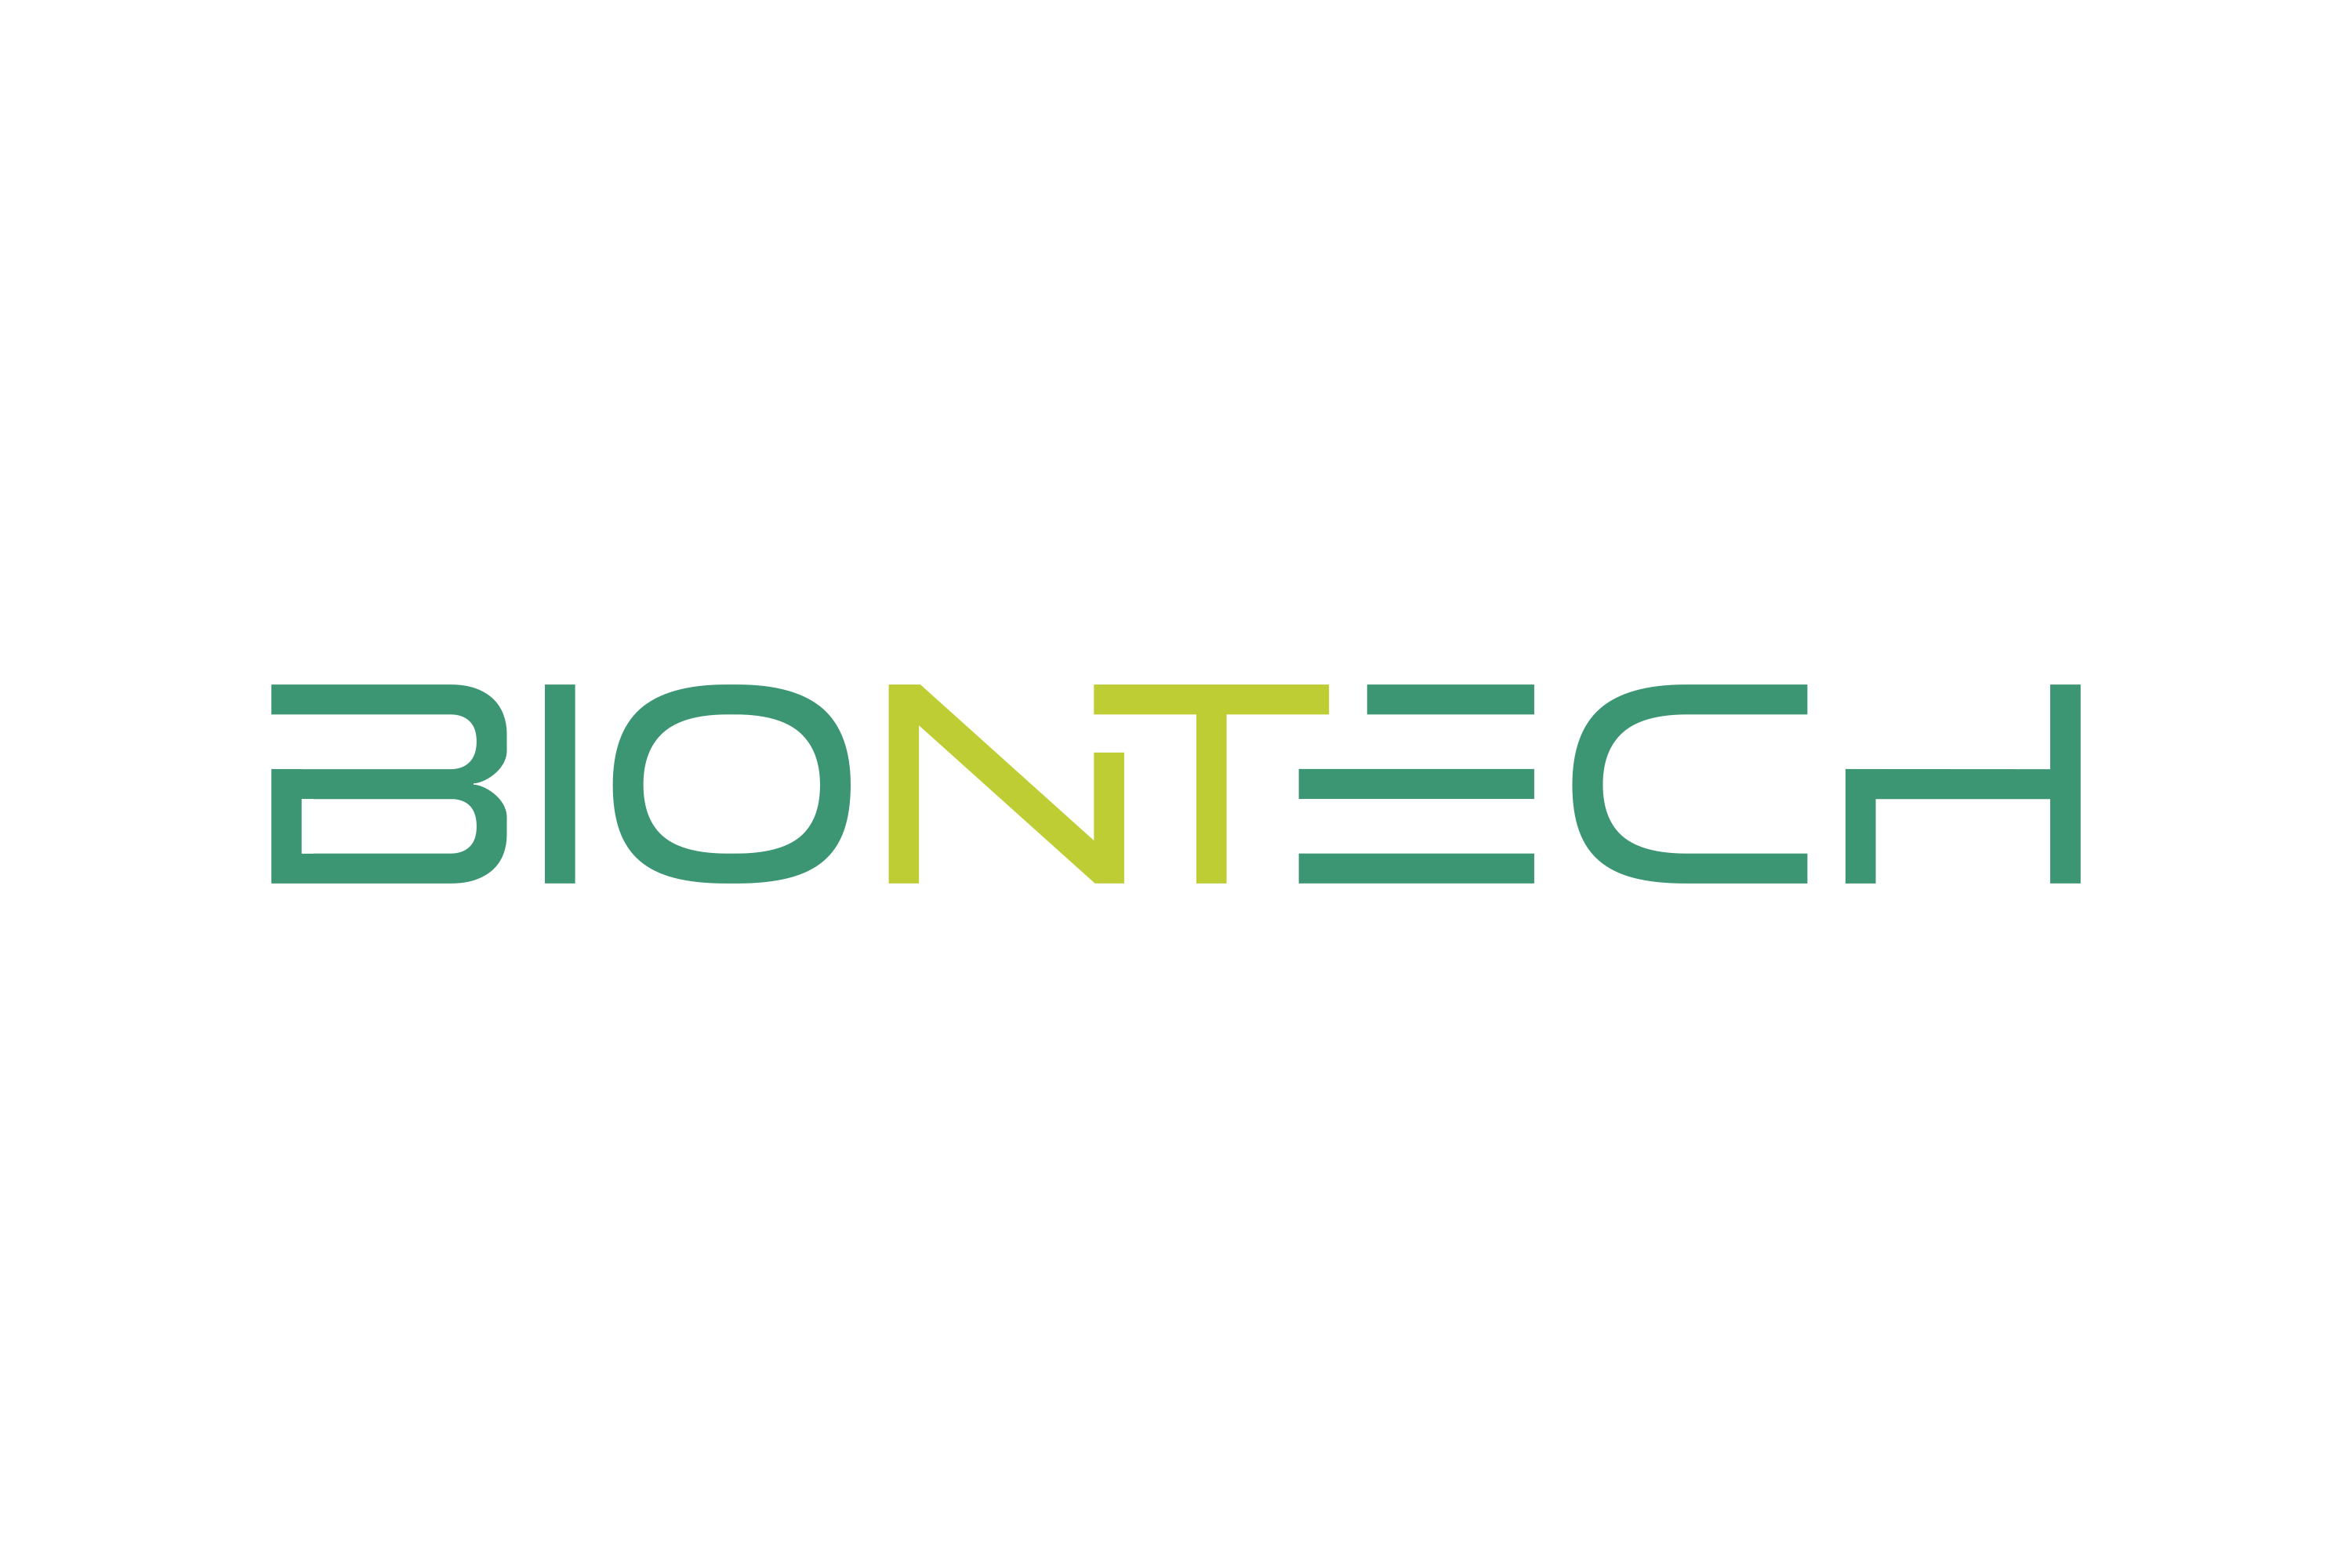 Biontech logotyp